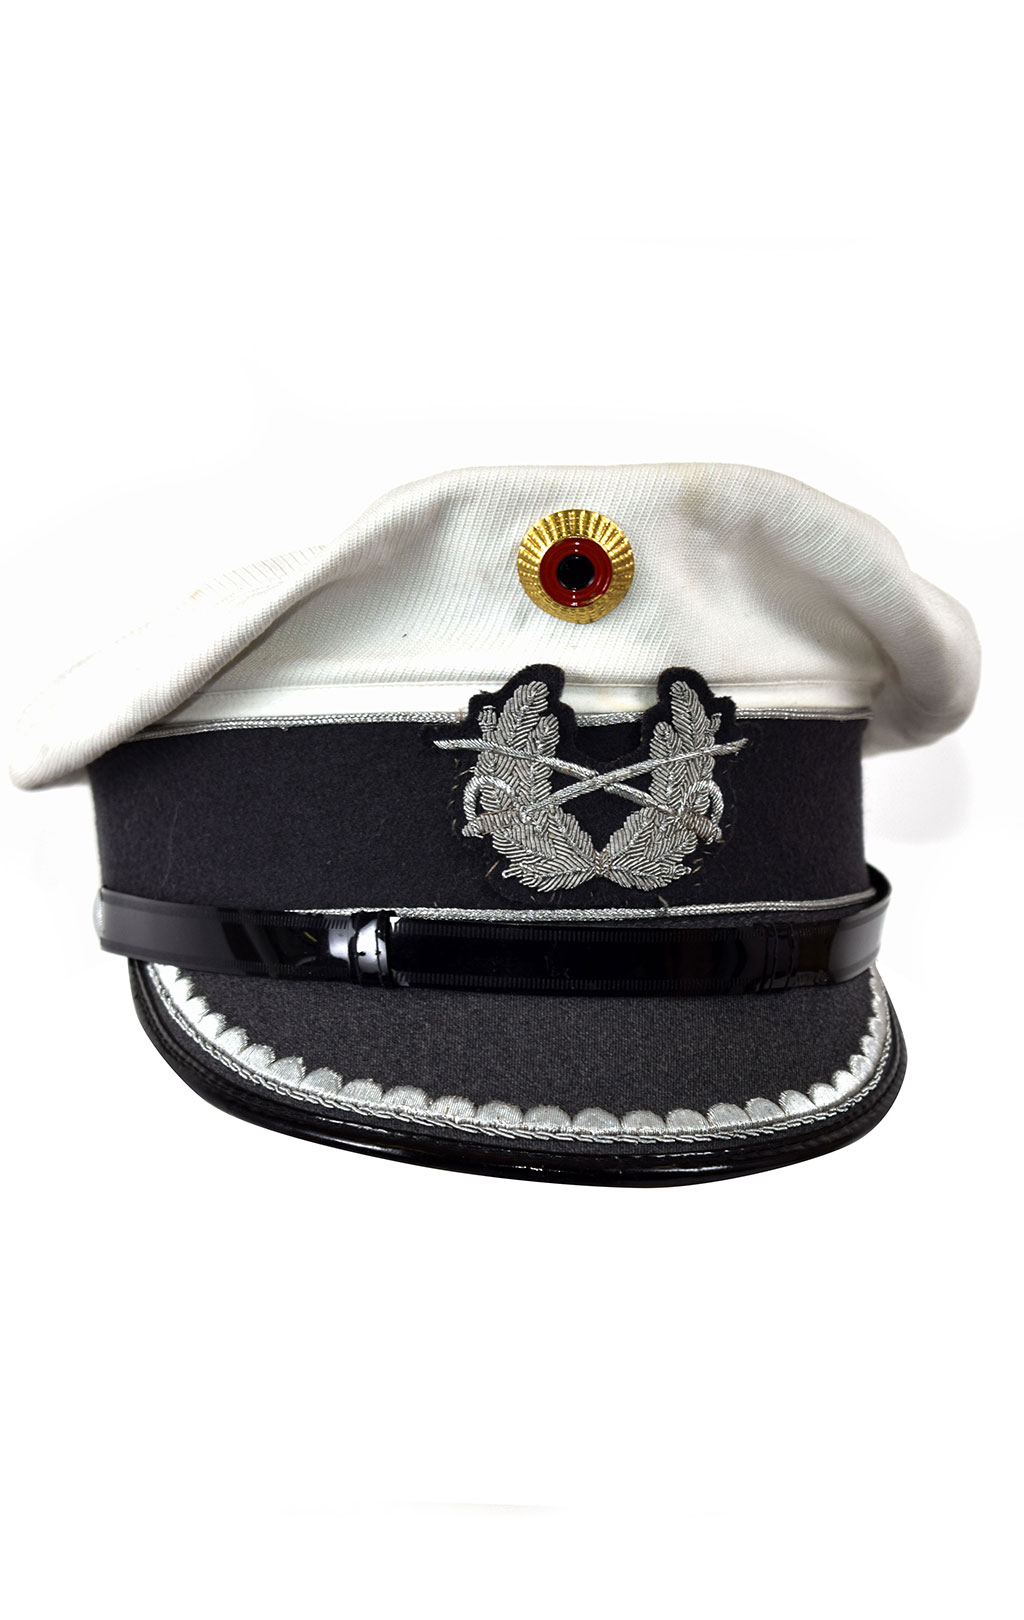 Фуражка офицерская white Германия